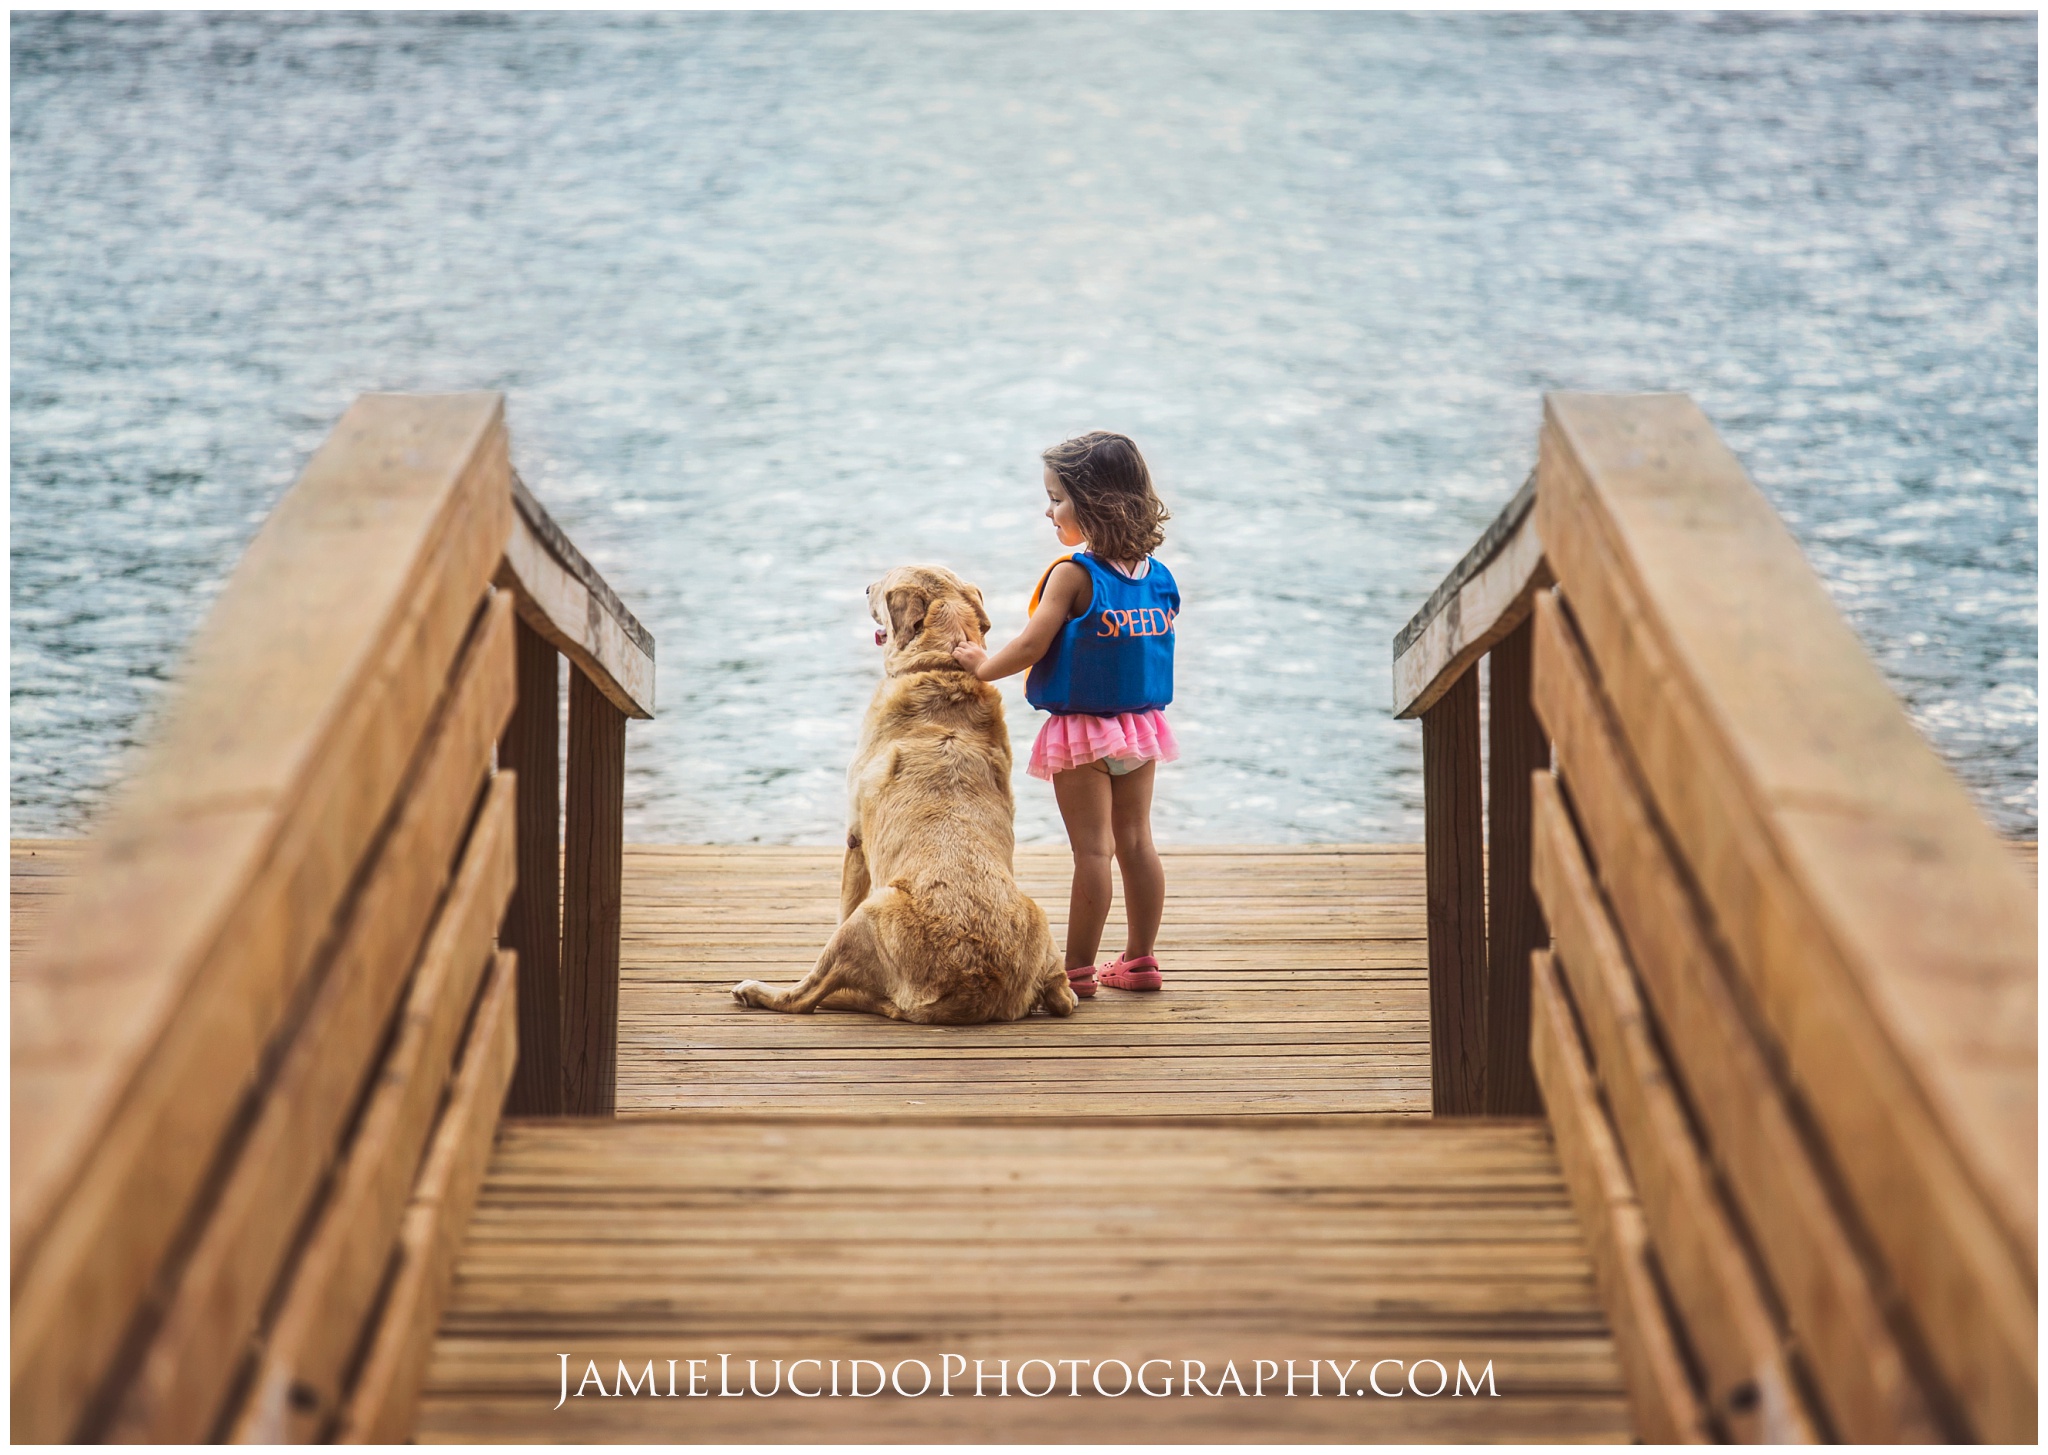 summertime, girl and dog, dock life,lifestyle photography,documentary photography